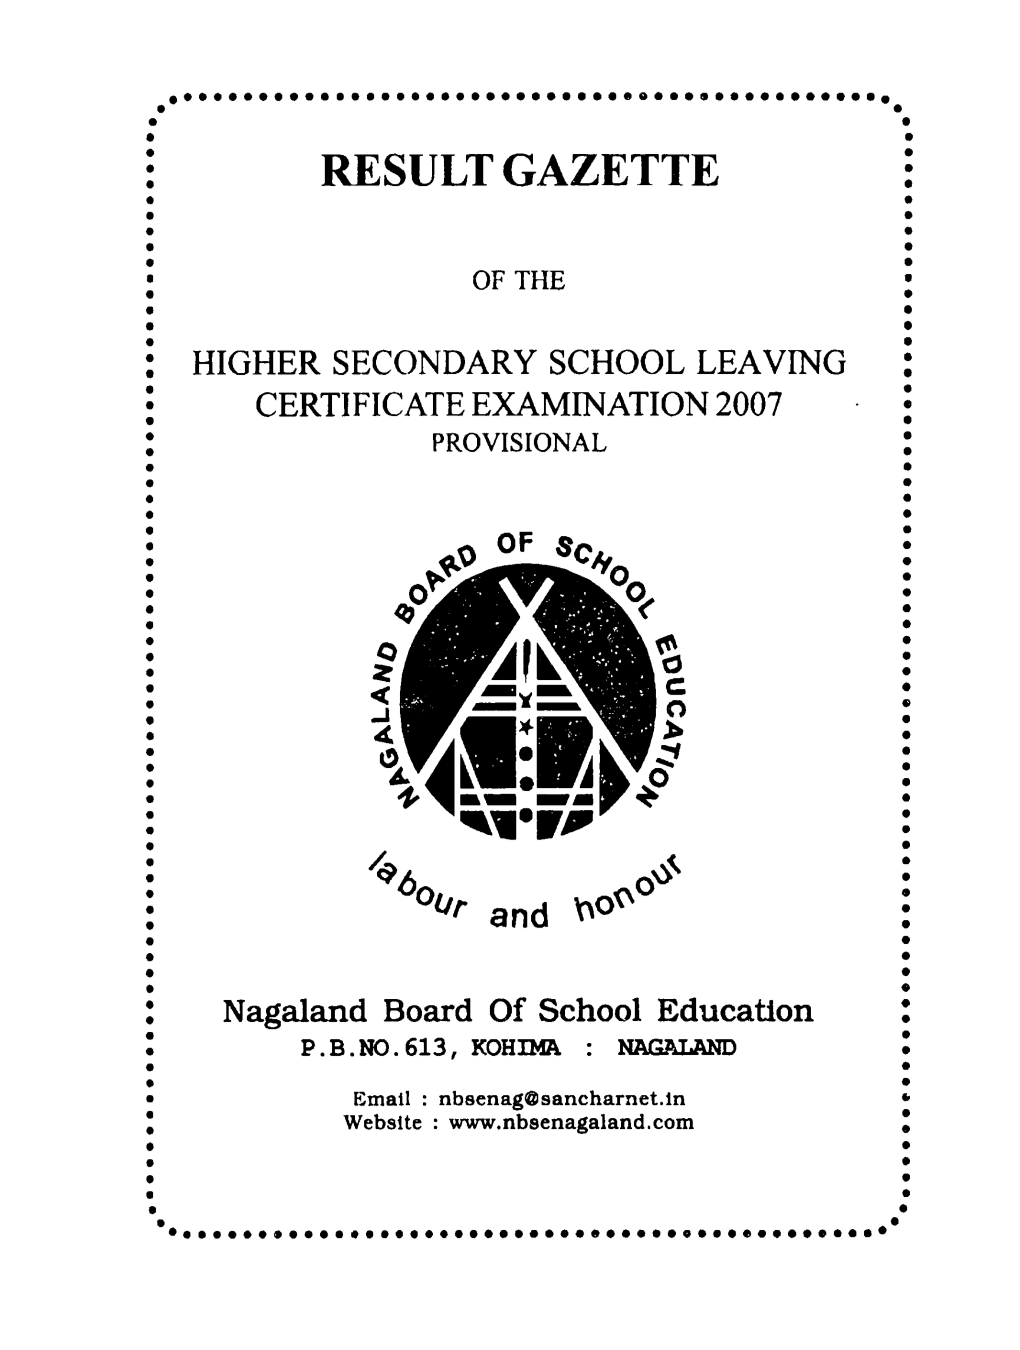 Result Gazette of the Higher Secondary School Leaving